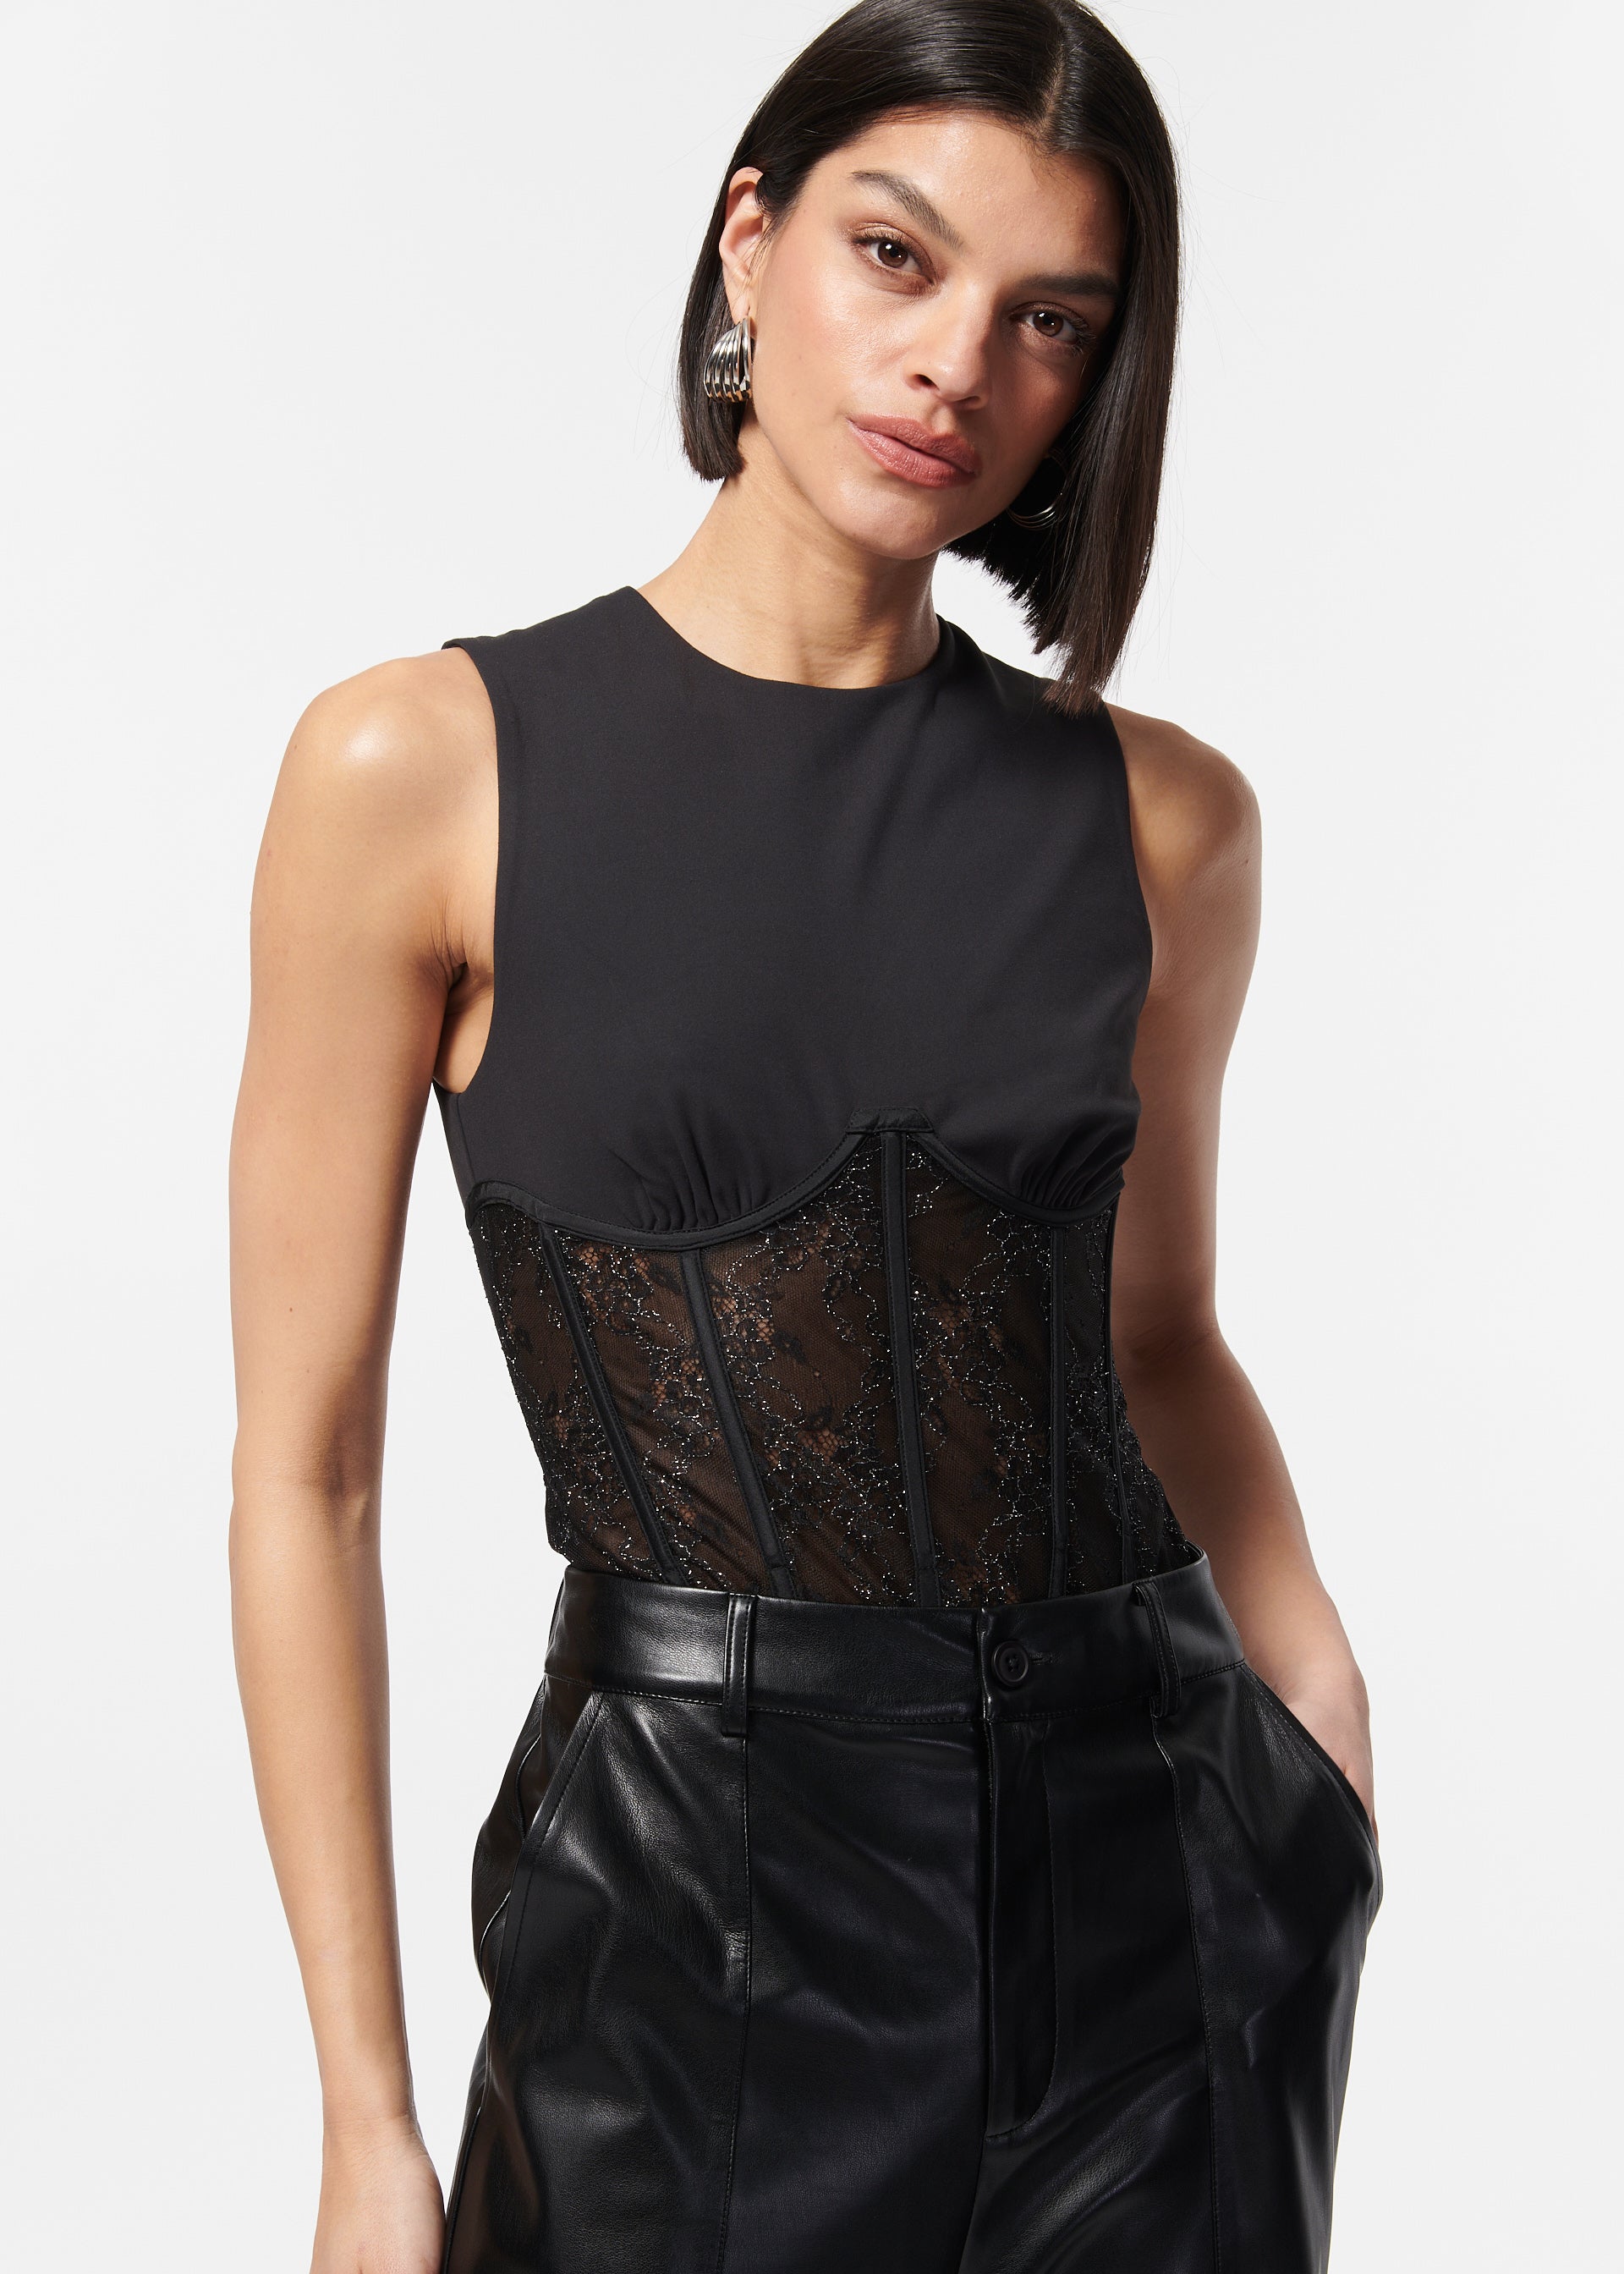 Cami NYC 35320 Woman's Briar Black Lace Corset Bodysuit Size XS